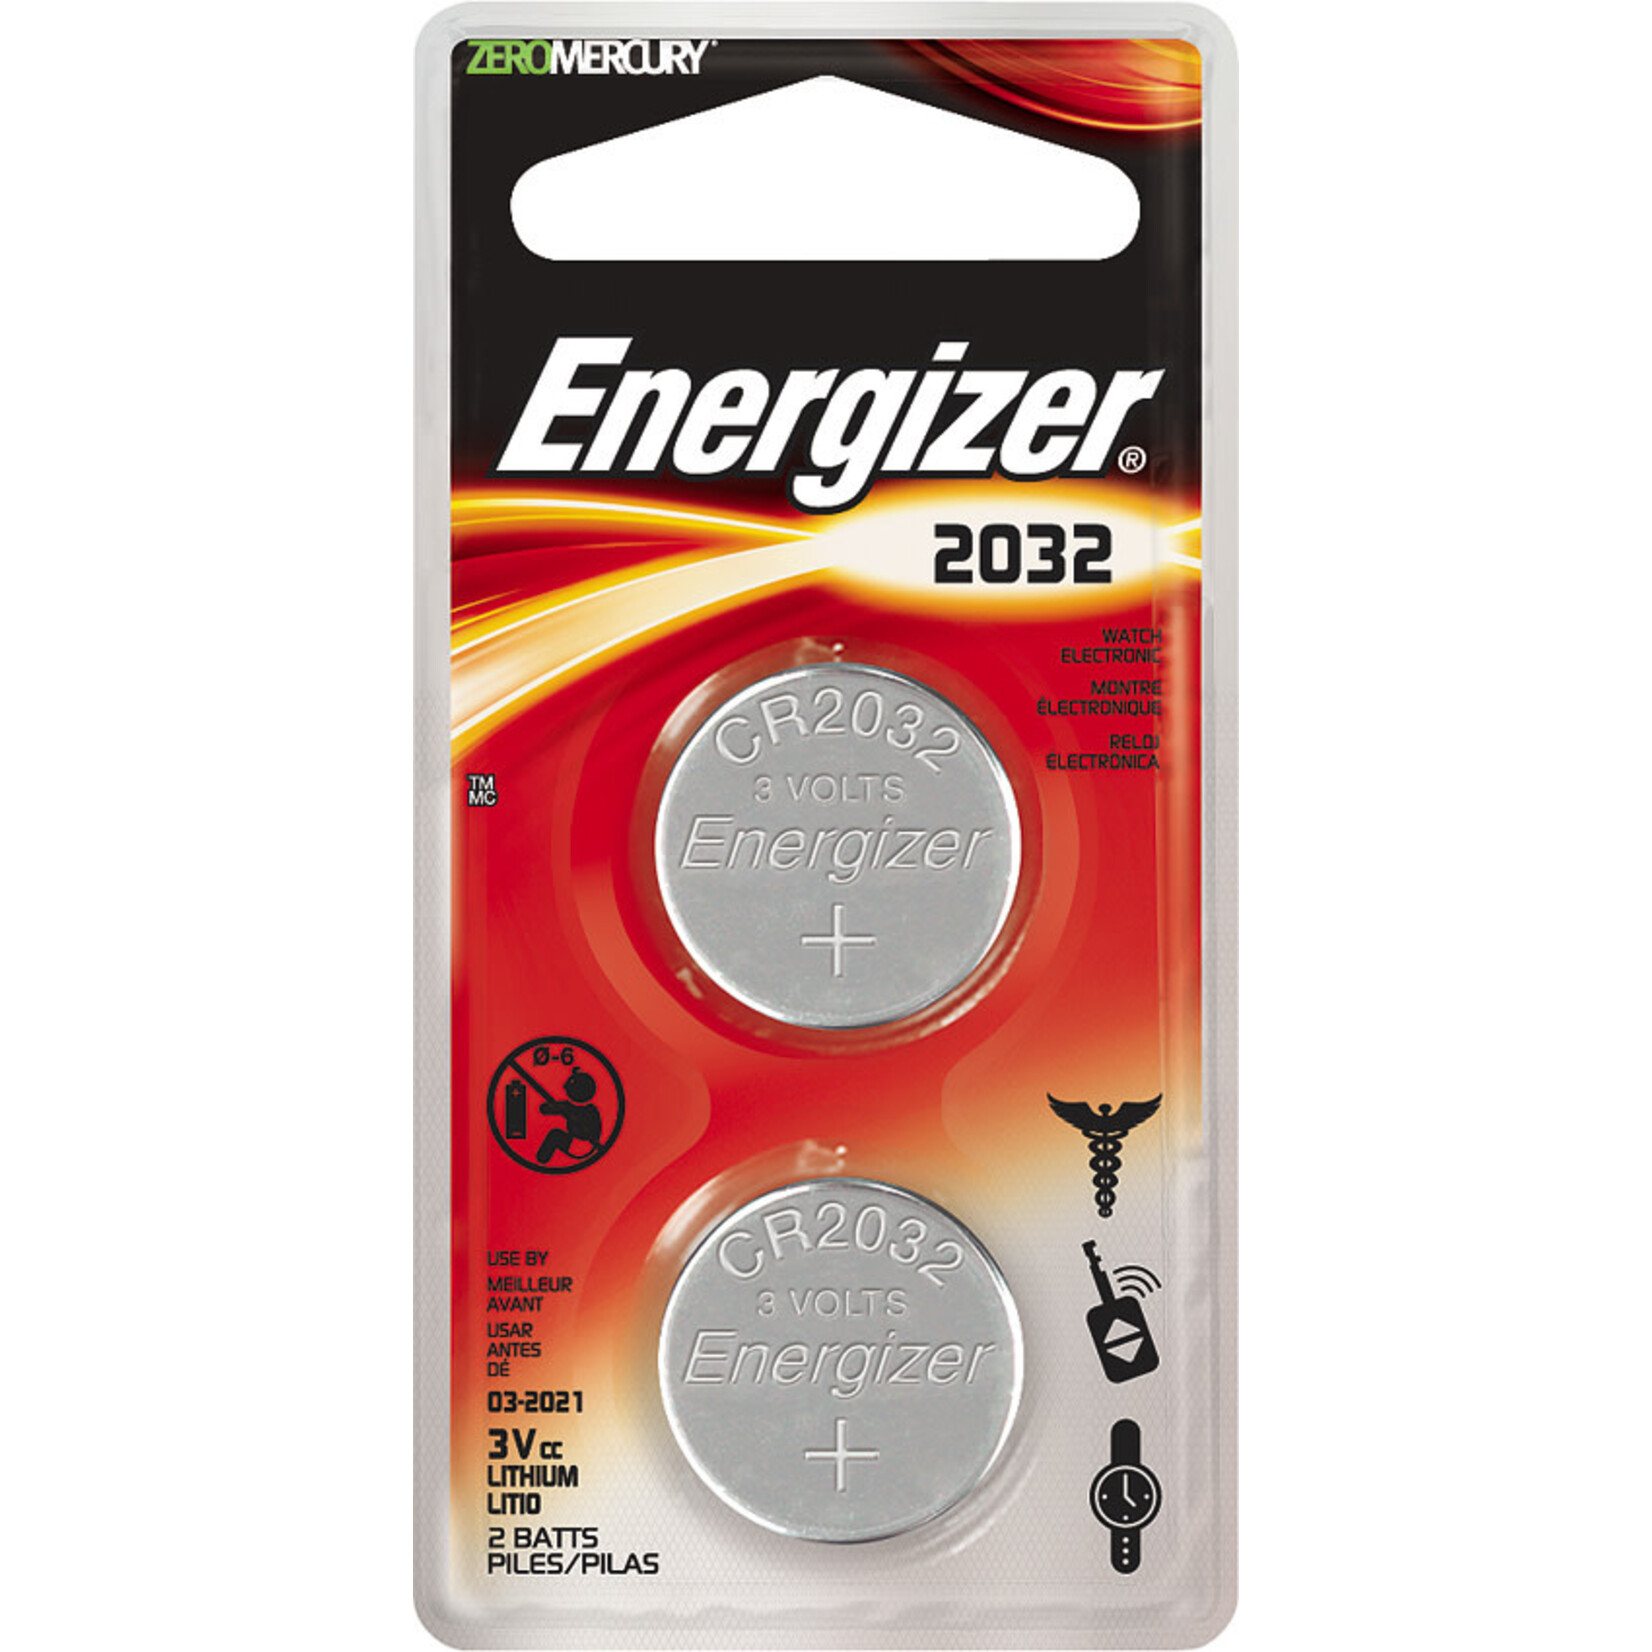 Energizer 2032 Batteries 2 Pack